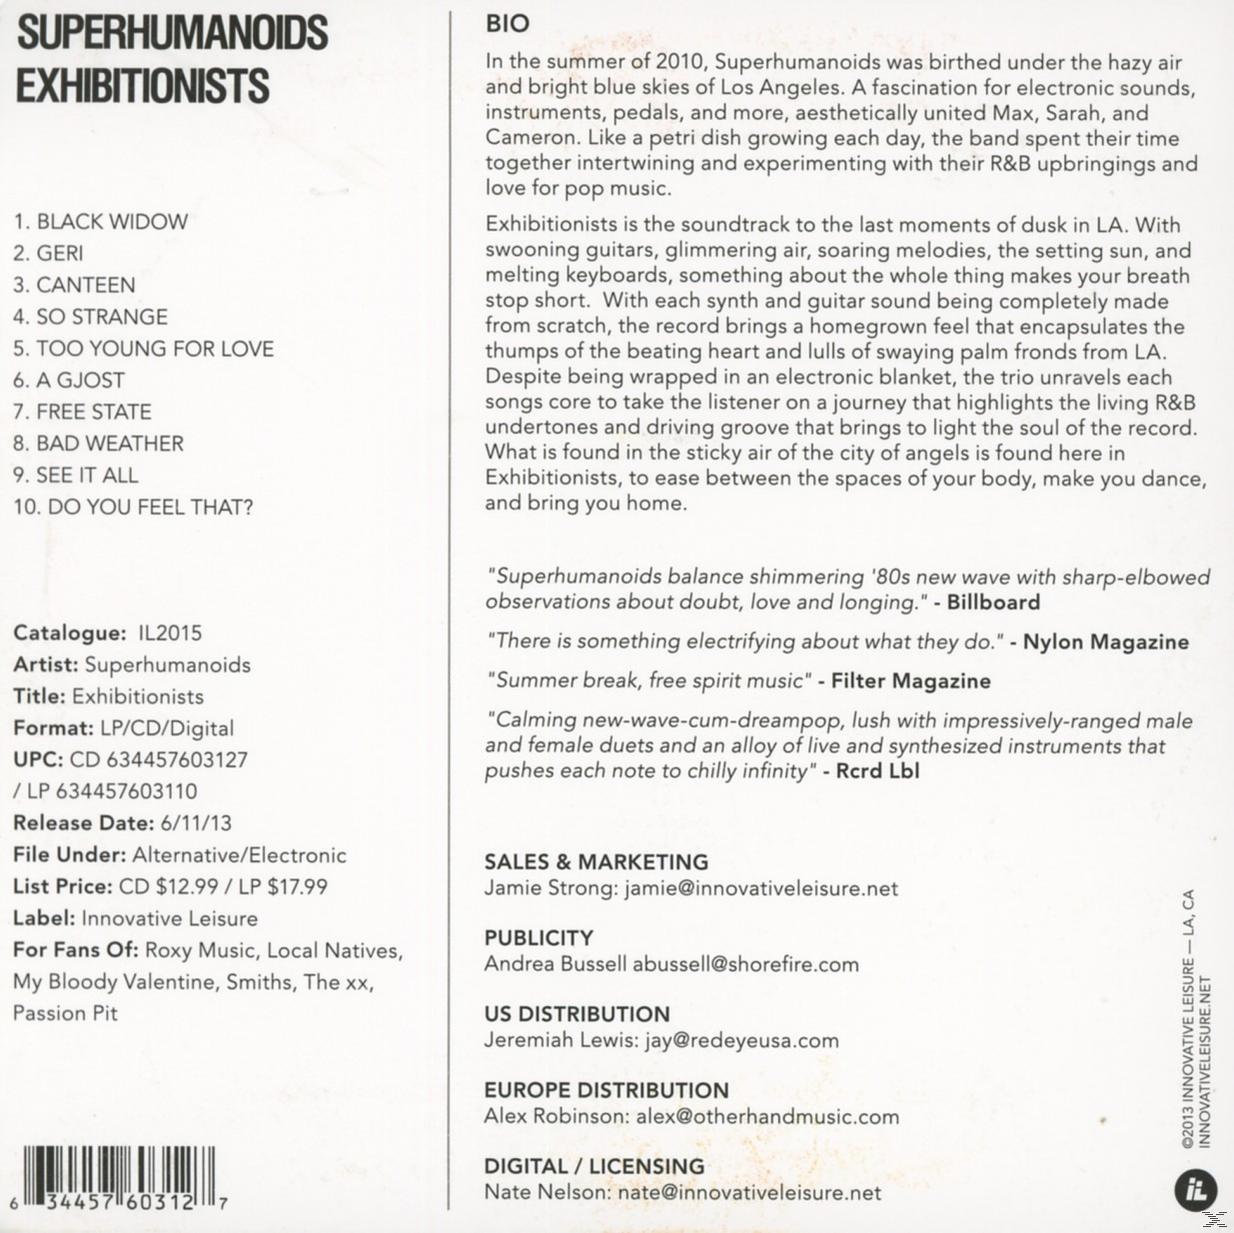 - Superhumanoids - (CD) Exhibitionists